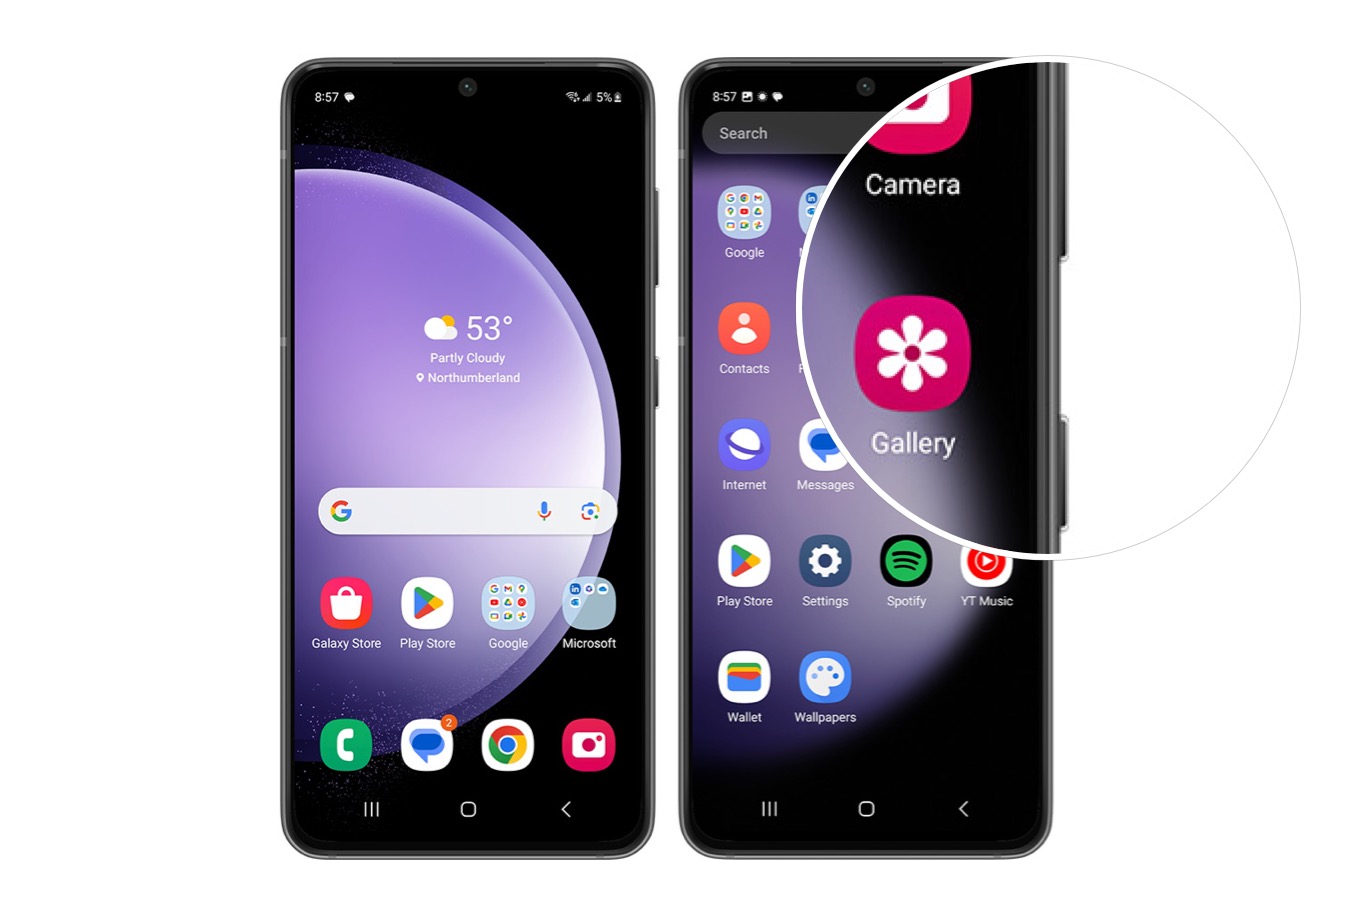 How do I take a screenshot on my Samsung Galaxy device?